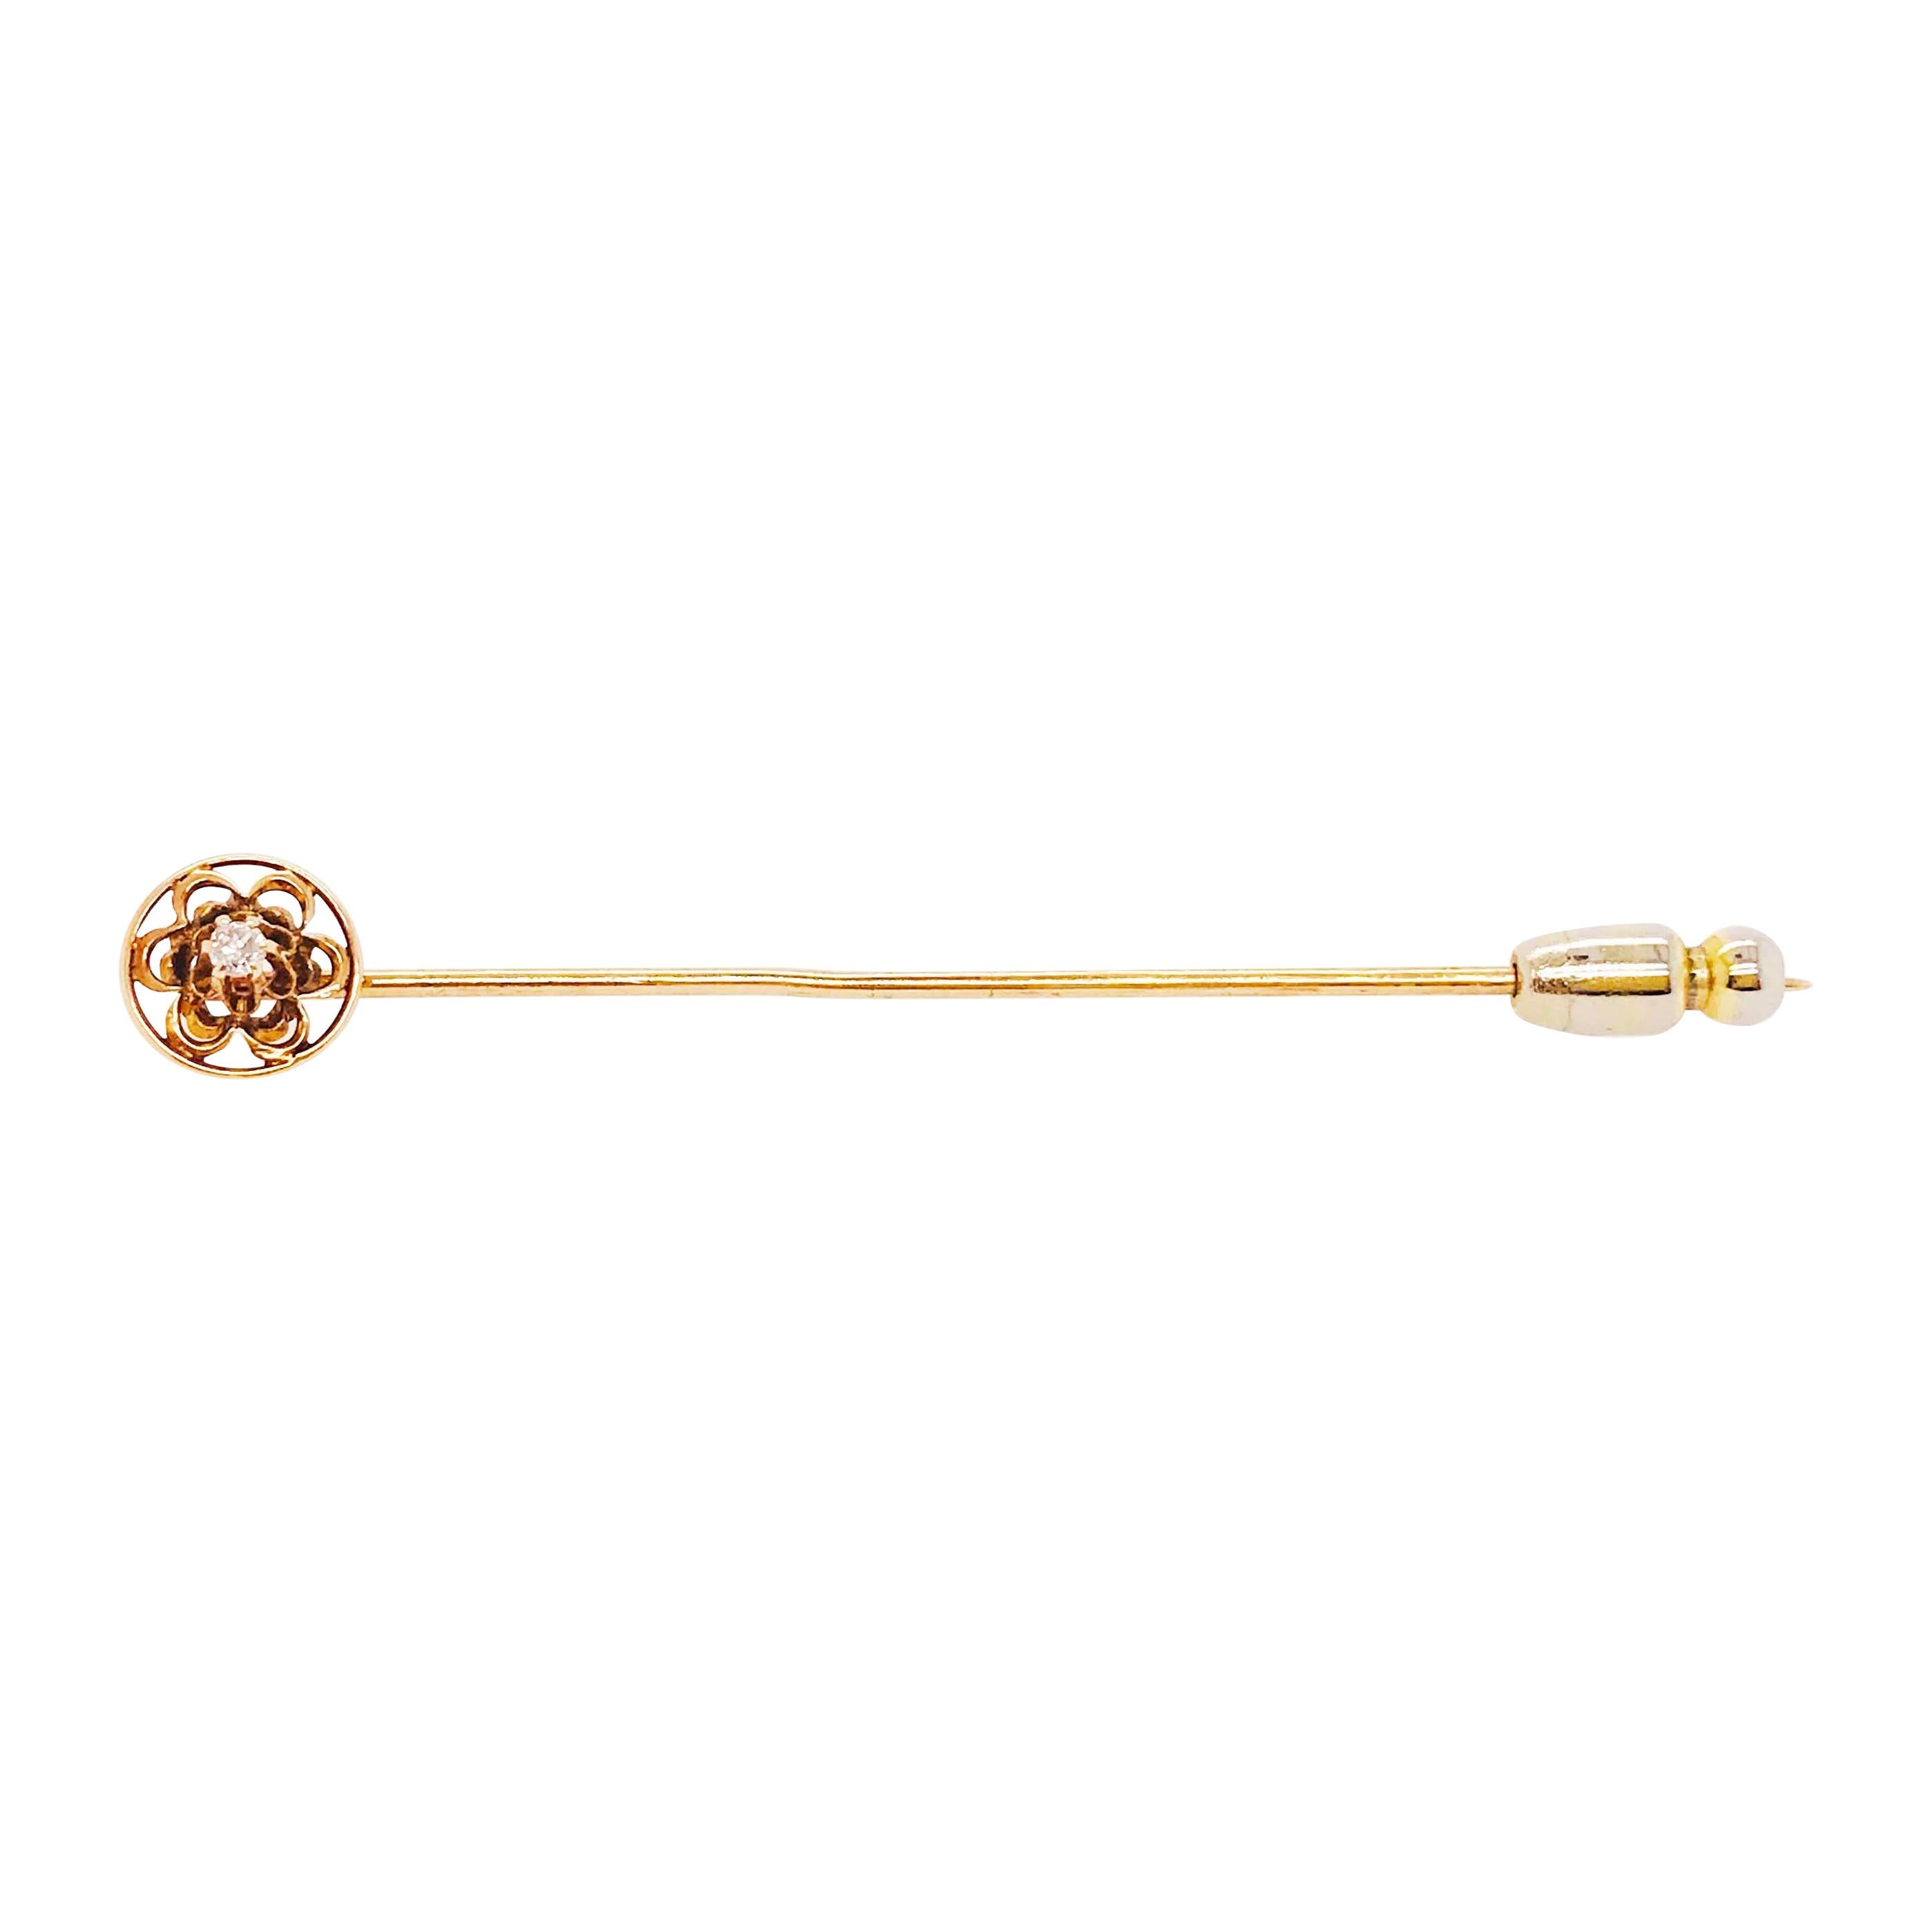 0.03 Carat Round Diamond Custom Tulip Design Brooch/Pin in 14 Karat Yellow Gold